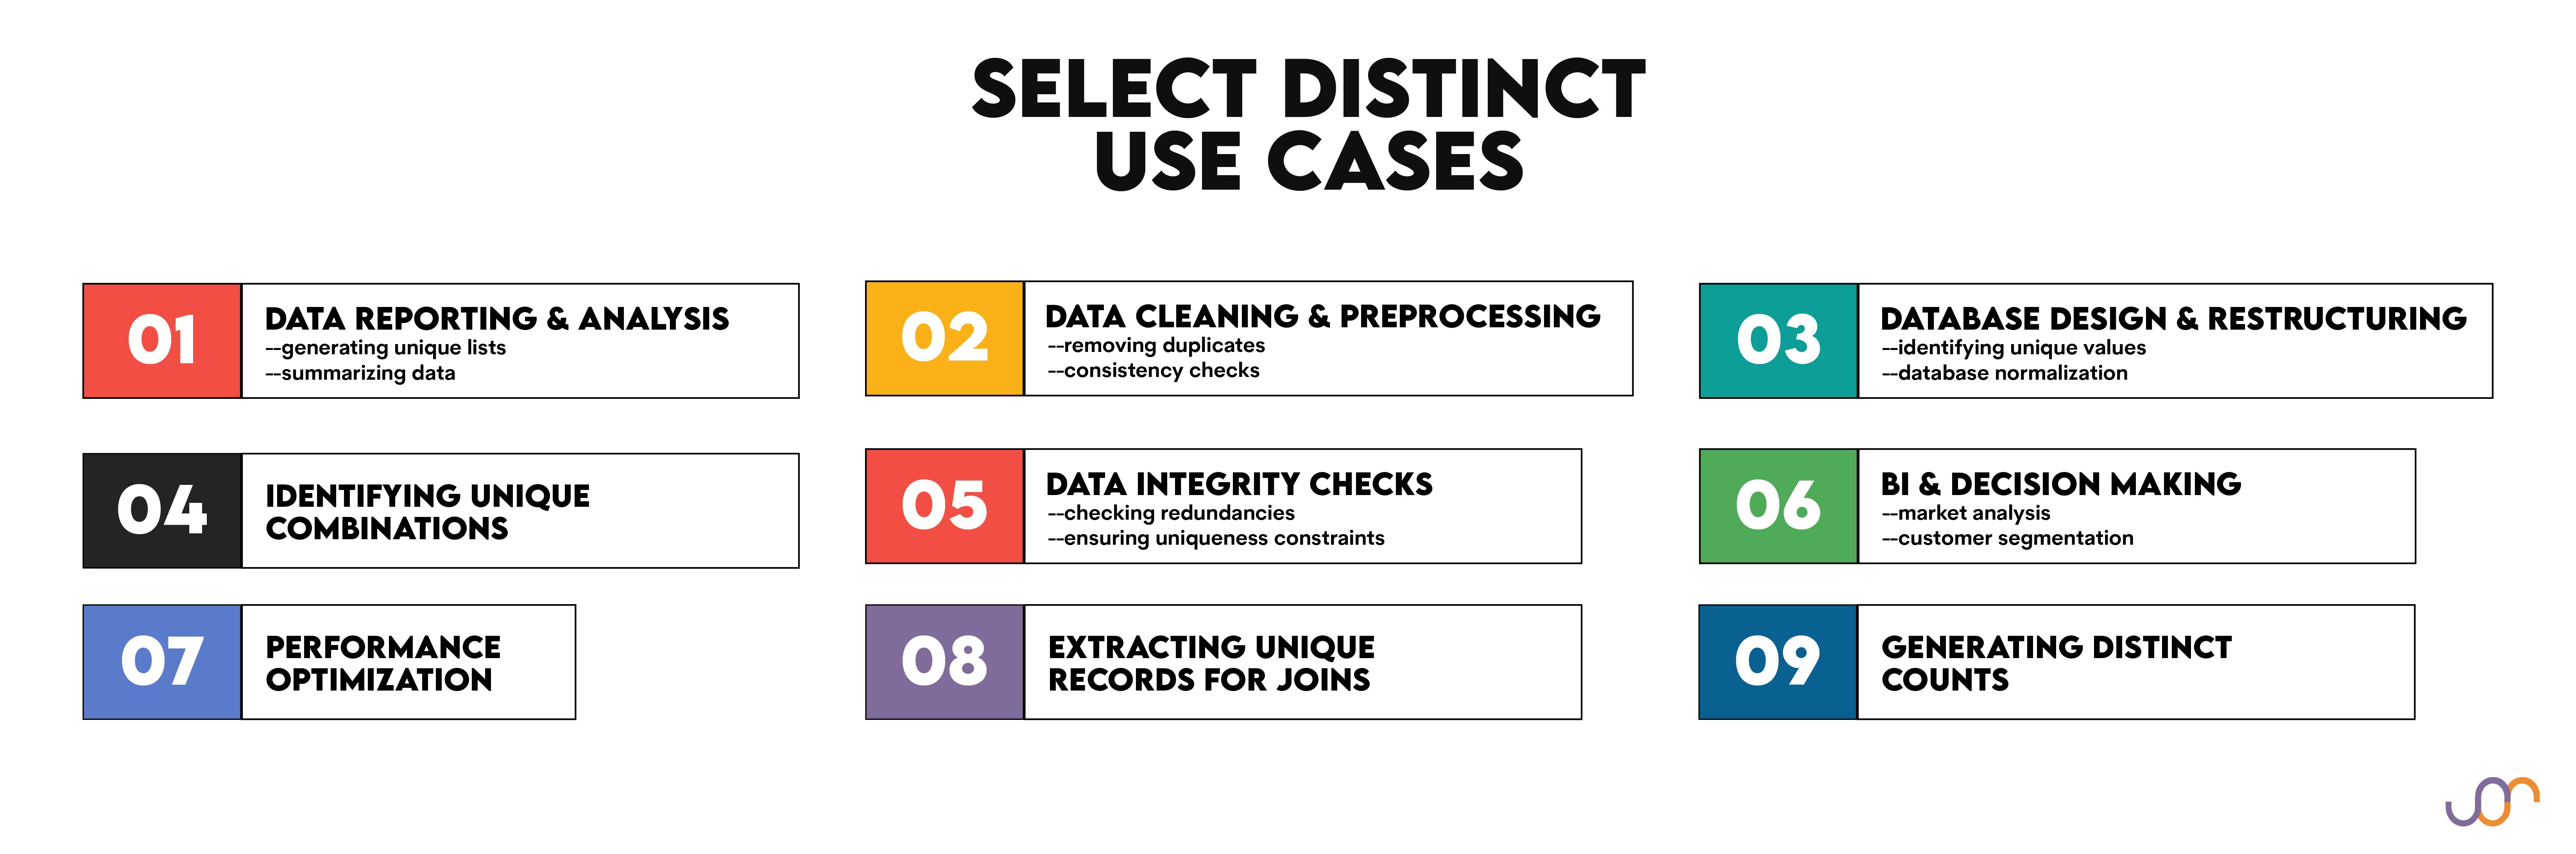 SQL SELECT DISTINCT Use Cases